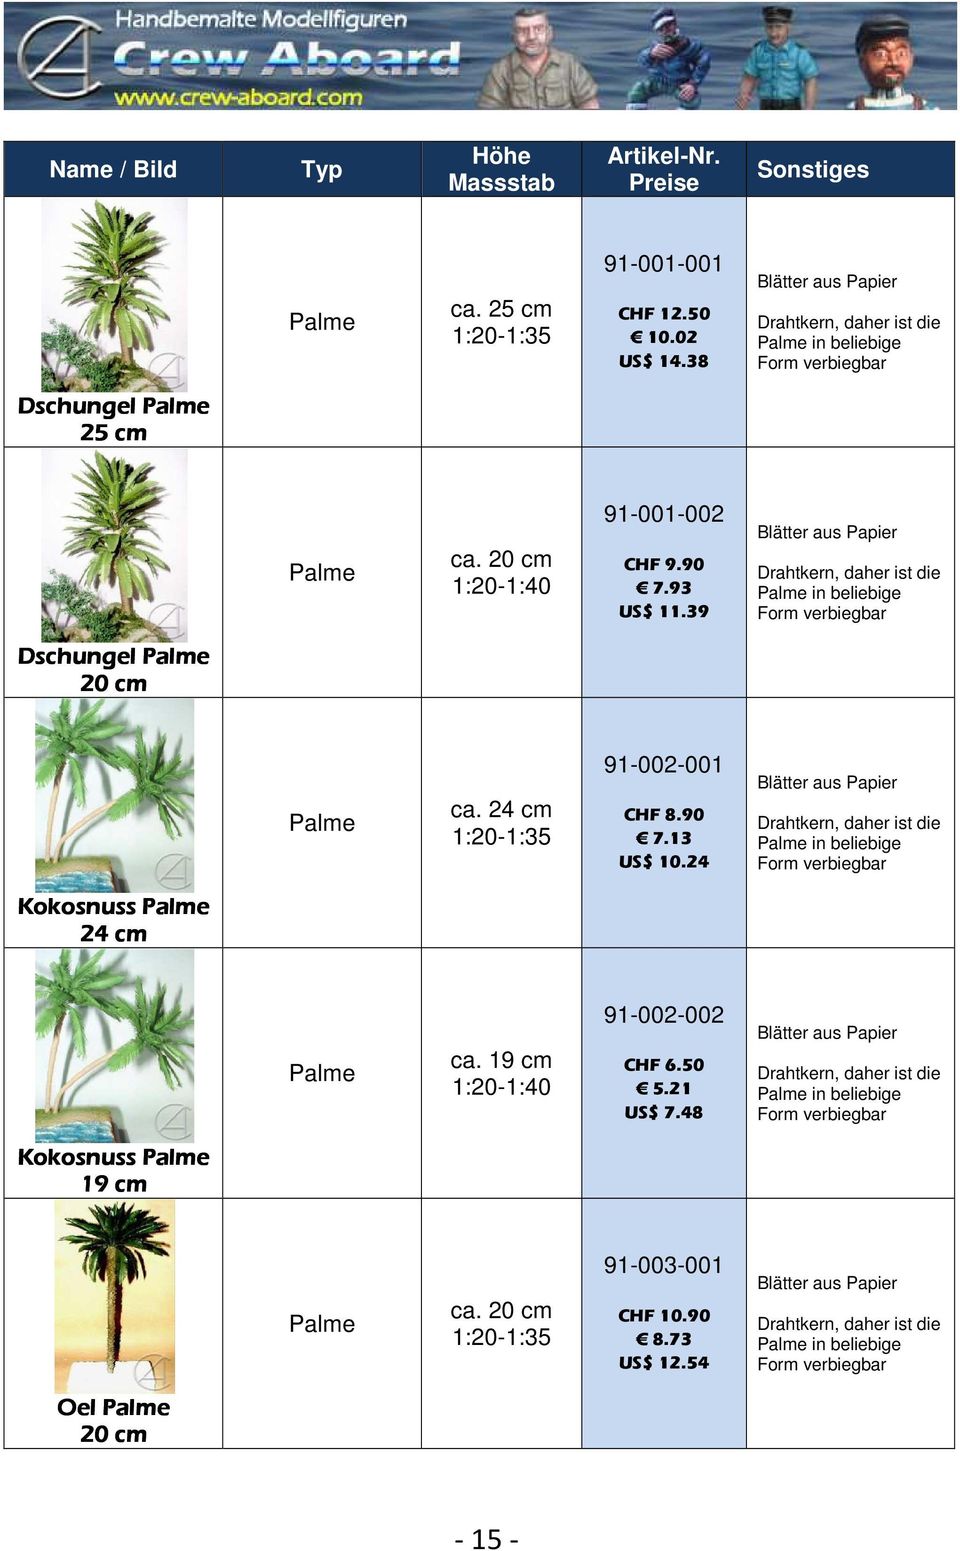 24 Drahtkern, daher ist die Palme in beliebige Form verbiegbar Kokosnuss Palme 24 cm Palme ca. 19 cm -1:40 91-002-002 CHF 6.50 5.21 US$ 7.